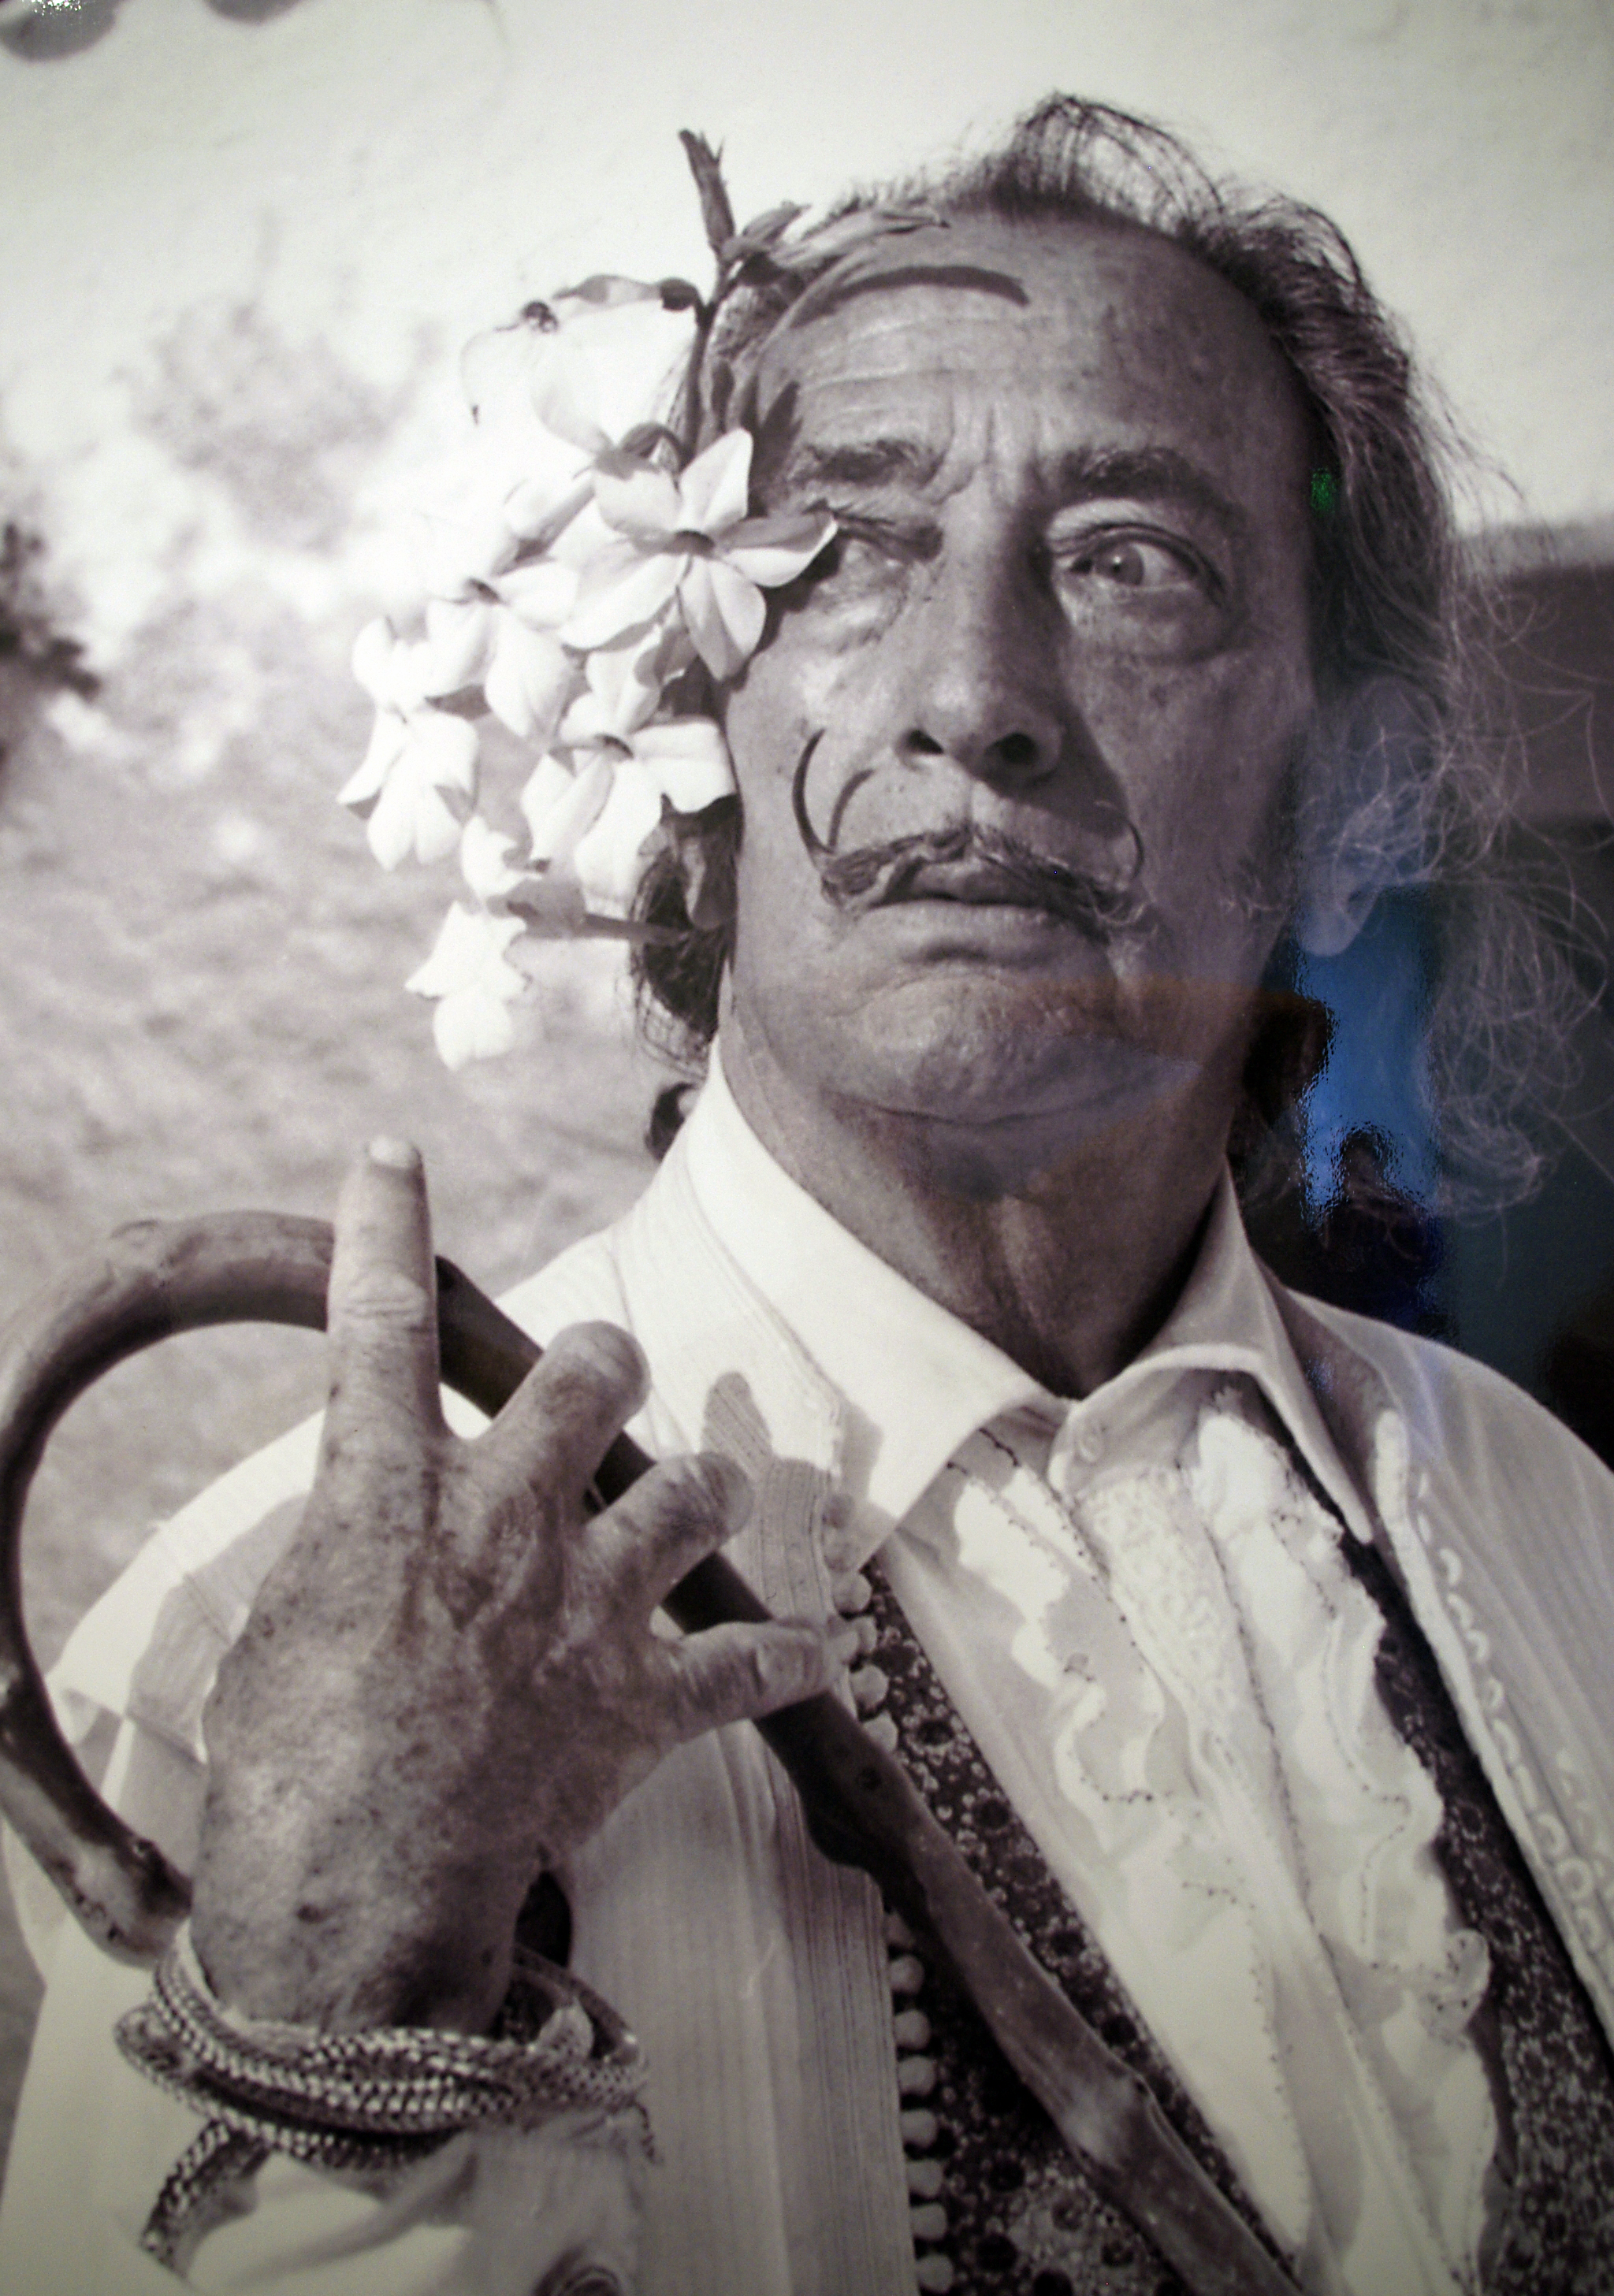 Tajemne życie Salvadora Dalí